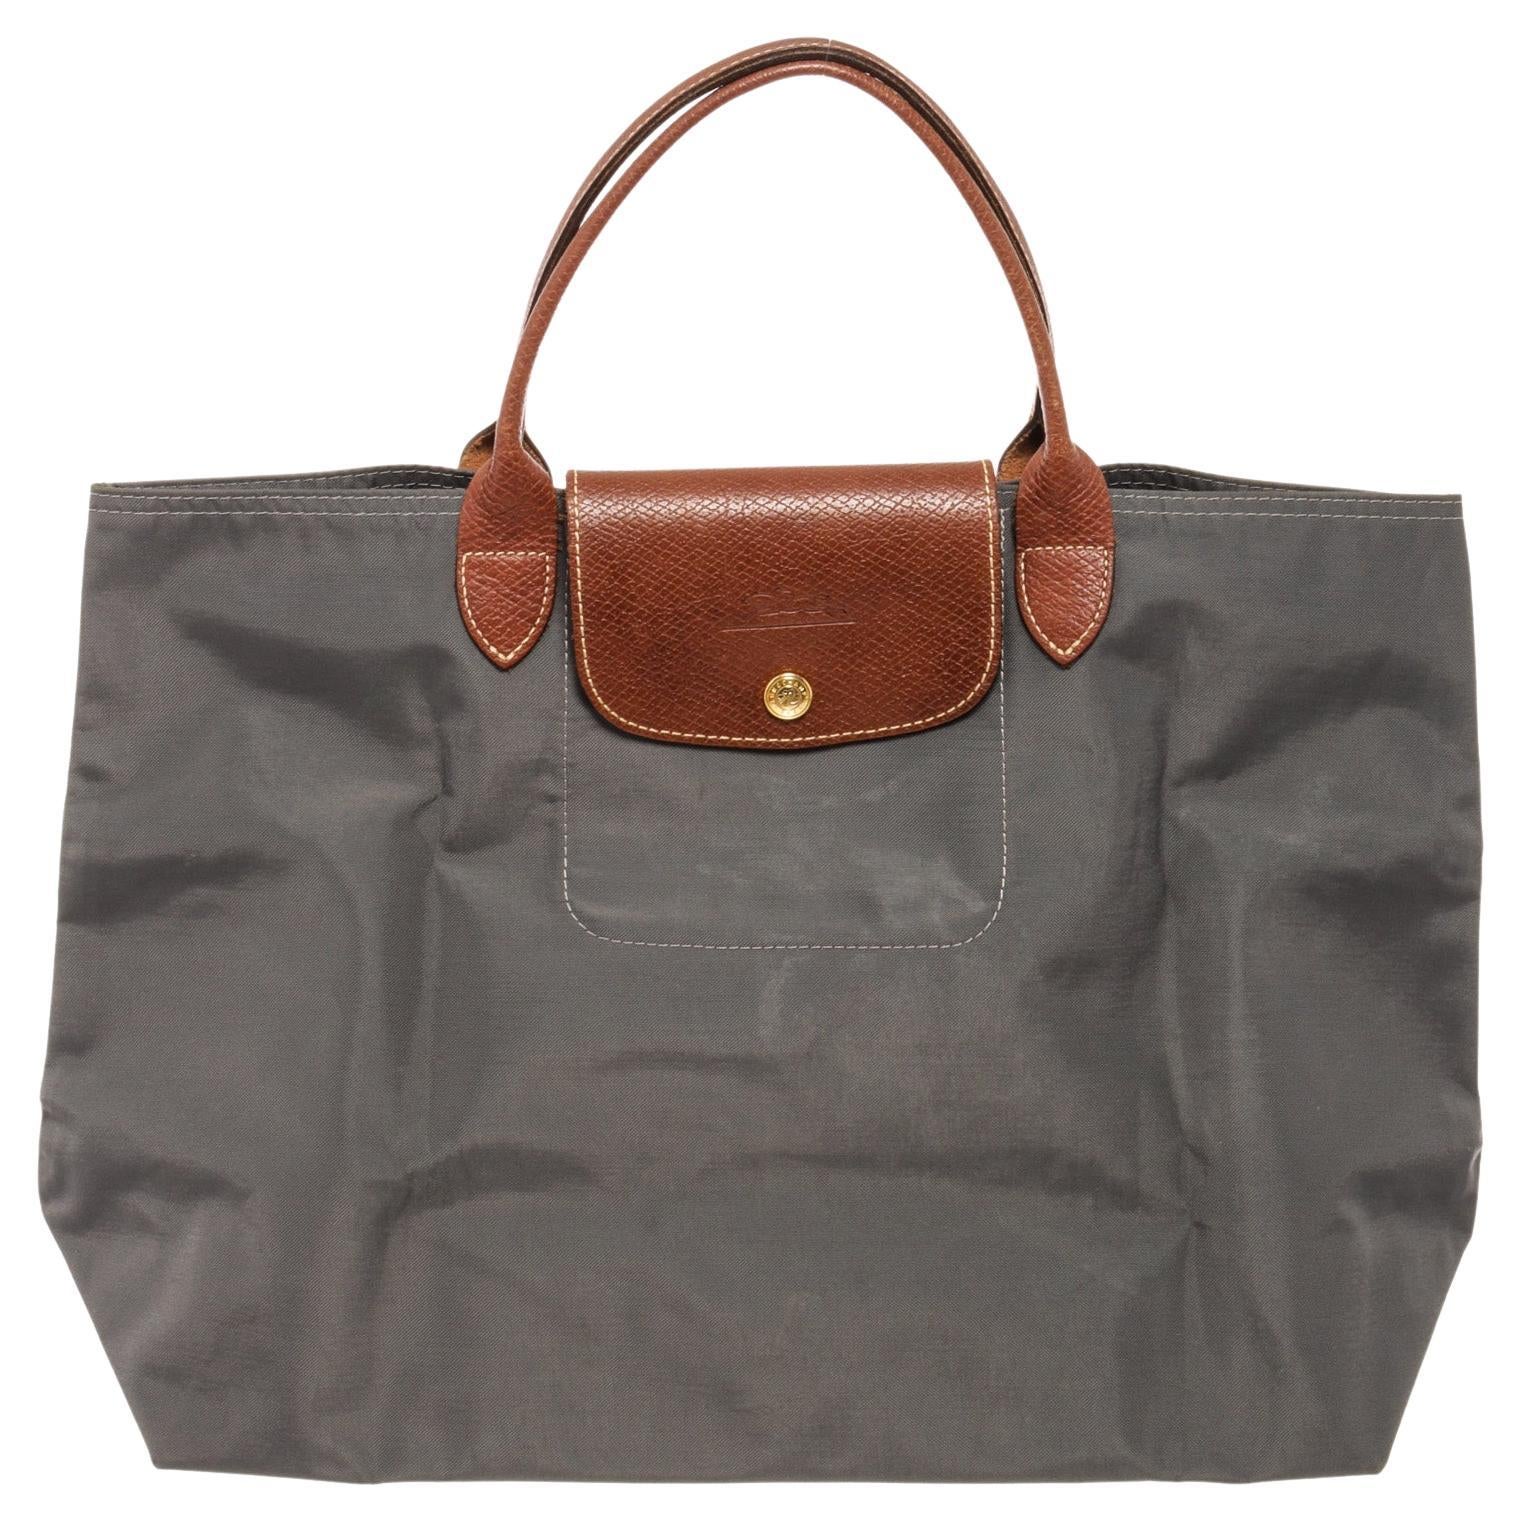 Longchamp | Bags | Longchamp Le Pliage Medium Bag For Sale | Poshmark